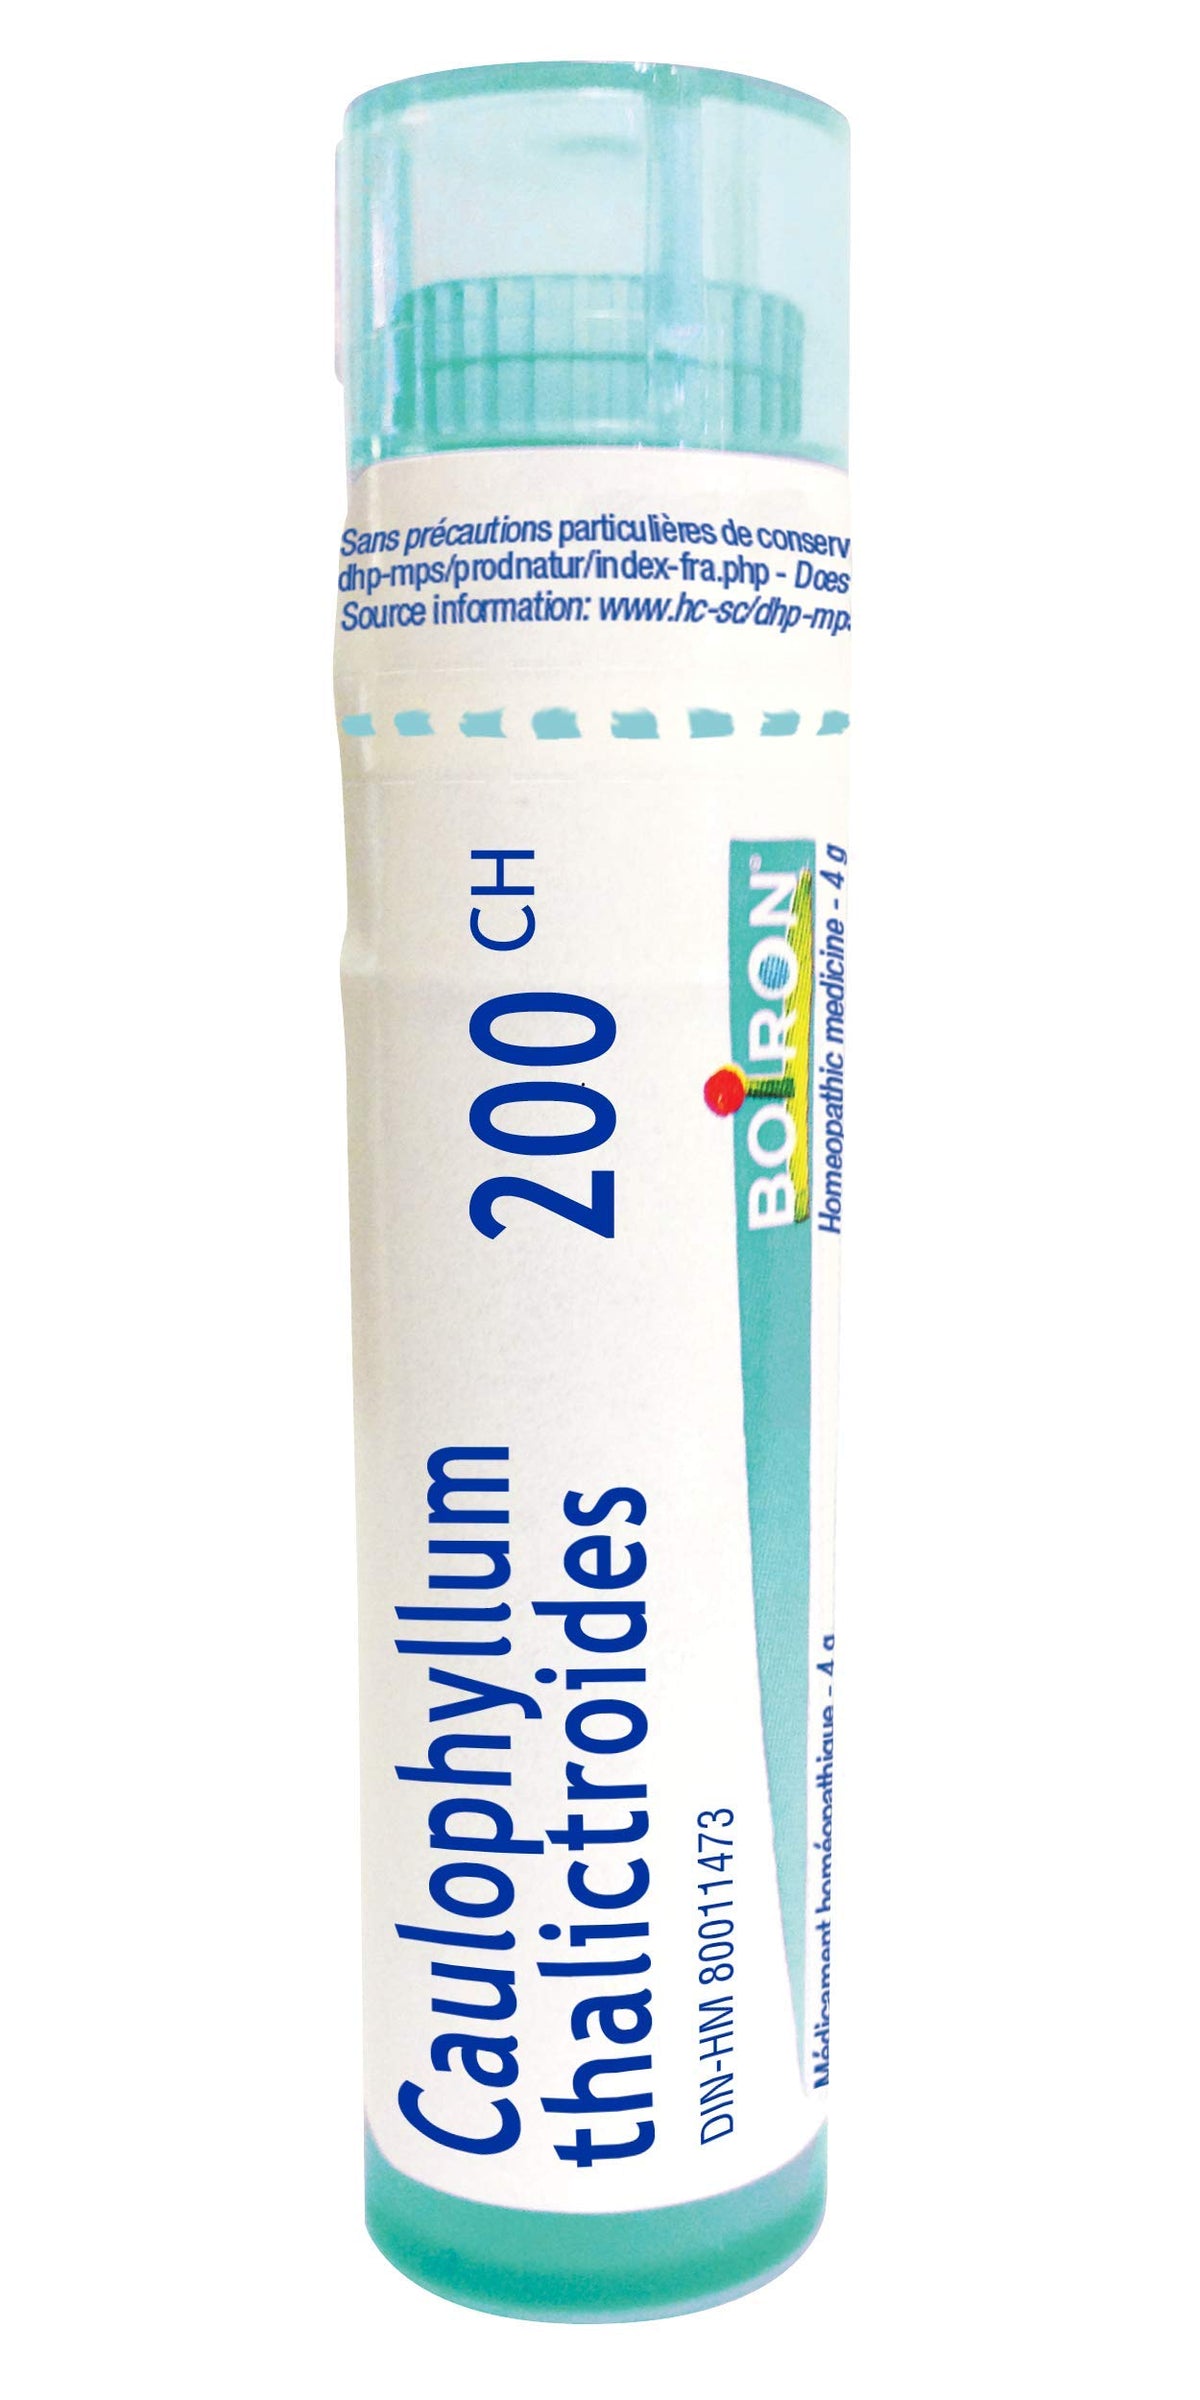 Boiron Caulophyllum Thalictroides 200ch / 200 C, 4g, Homeopthic Medicine, Multi Dose Tube By Boiron Canada 4 gram